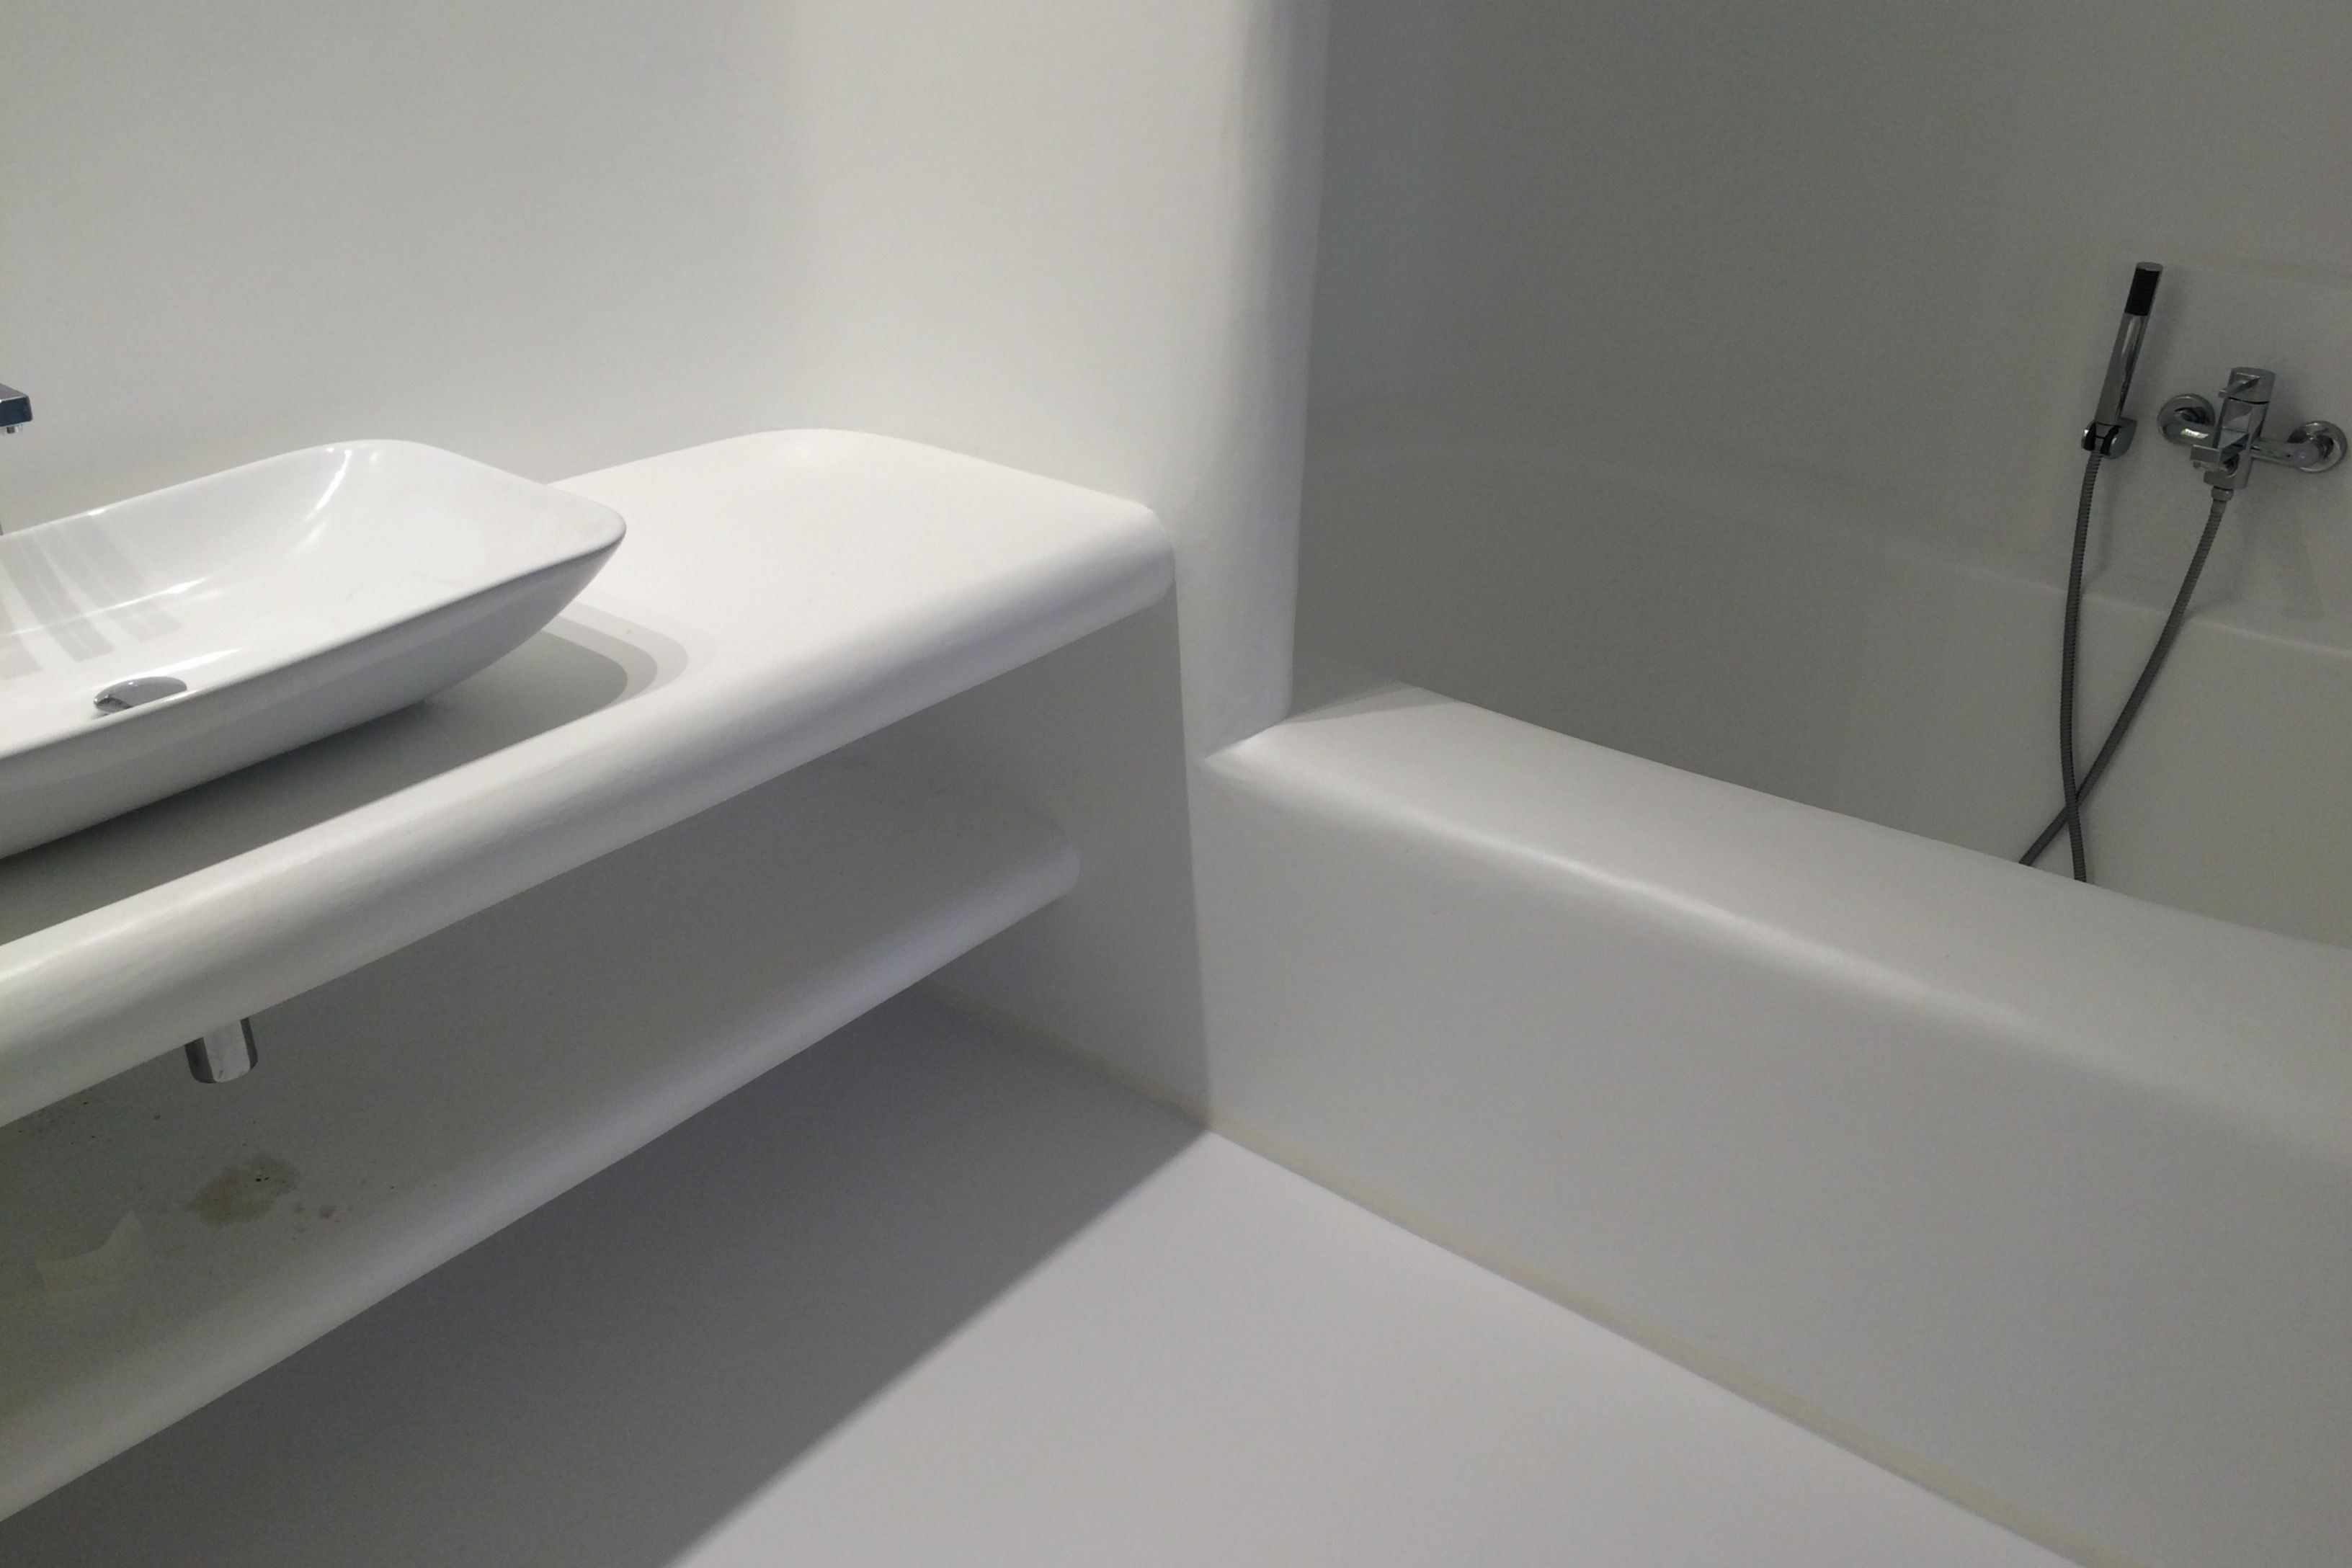 Sika ComfortFloor® white floor in modern white bathroom in hotel